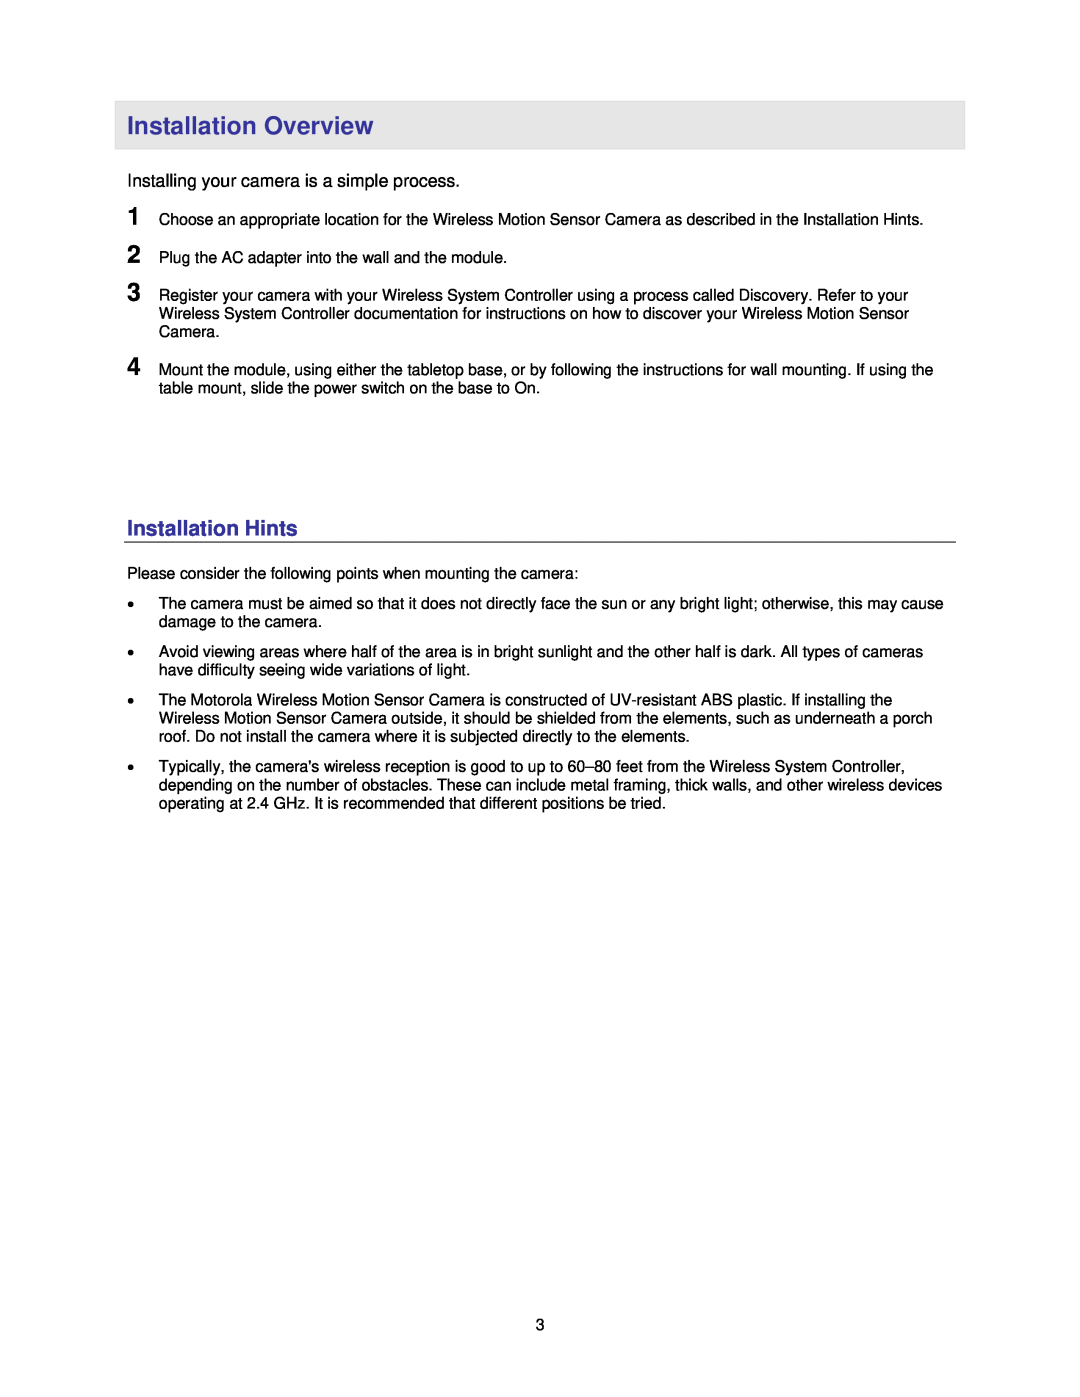 Motorola HMVC3050 manual Installation Overview, Installation Hints 